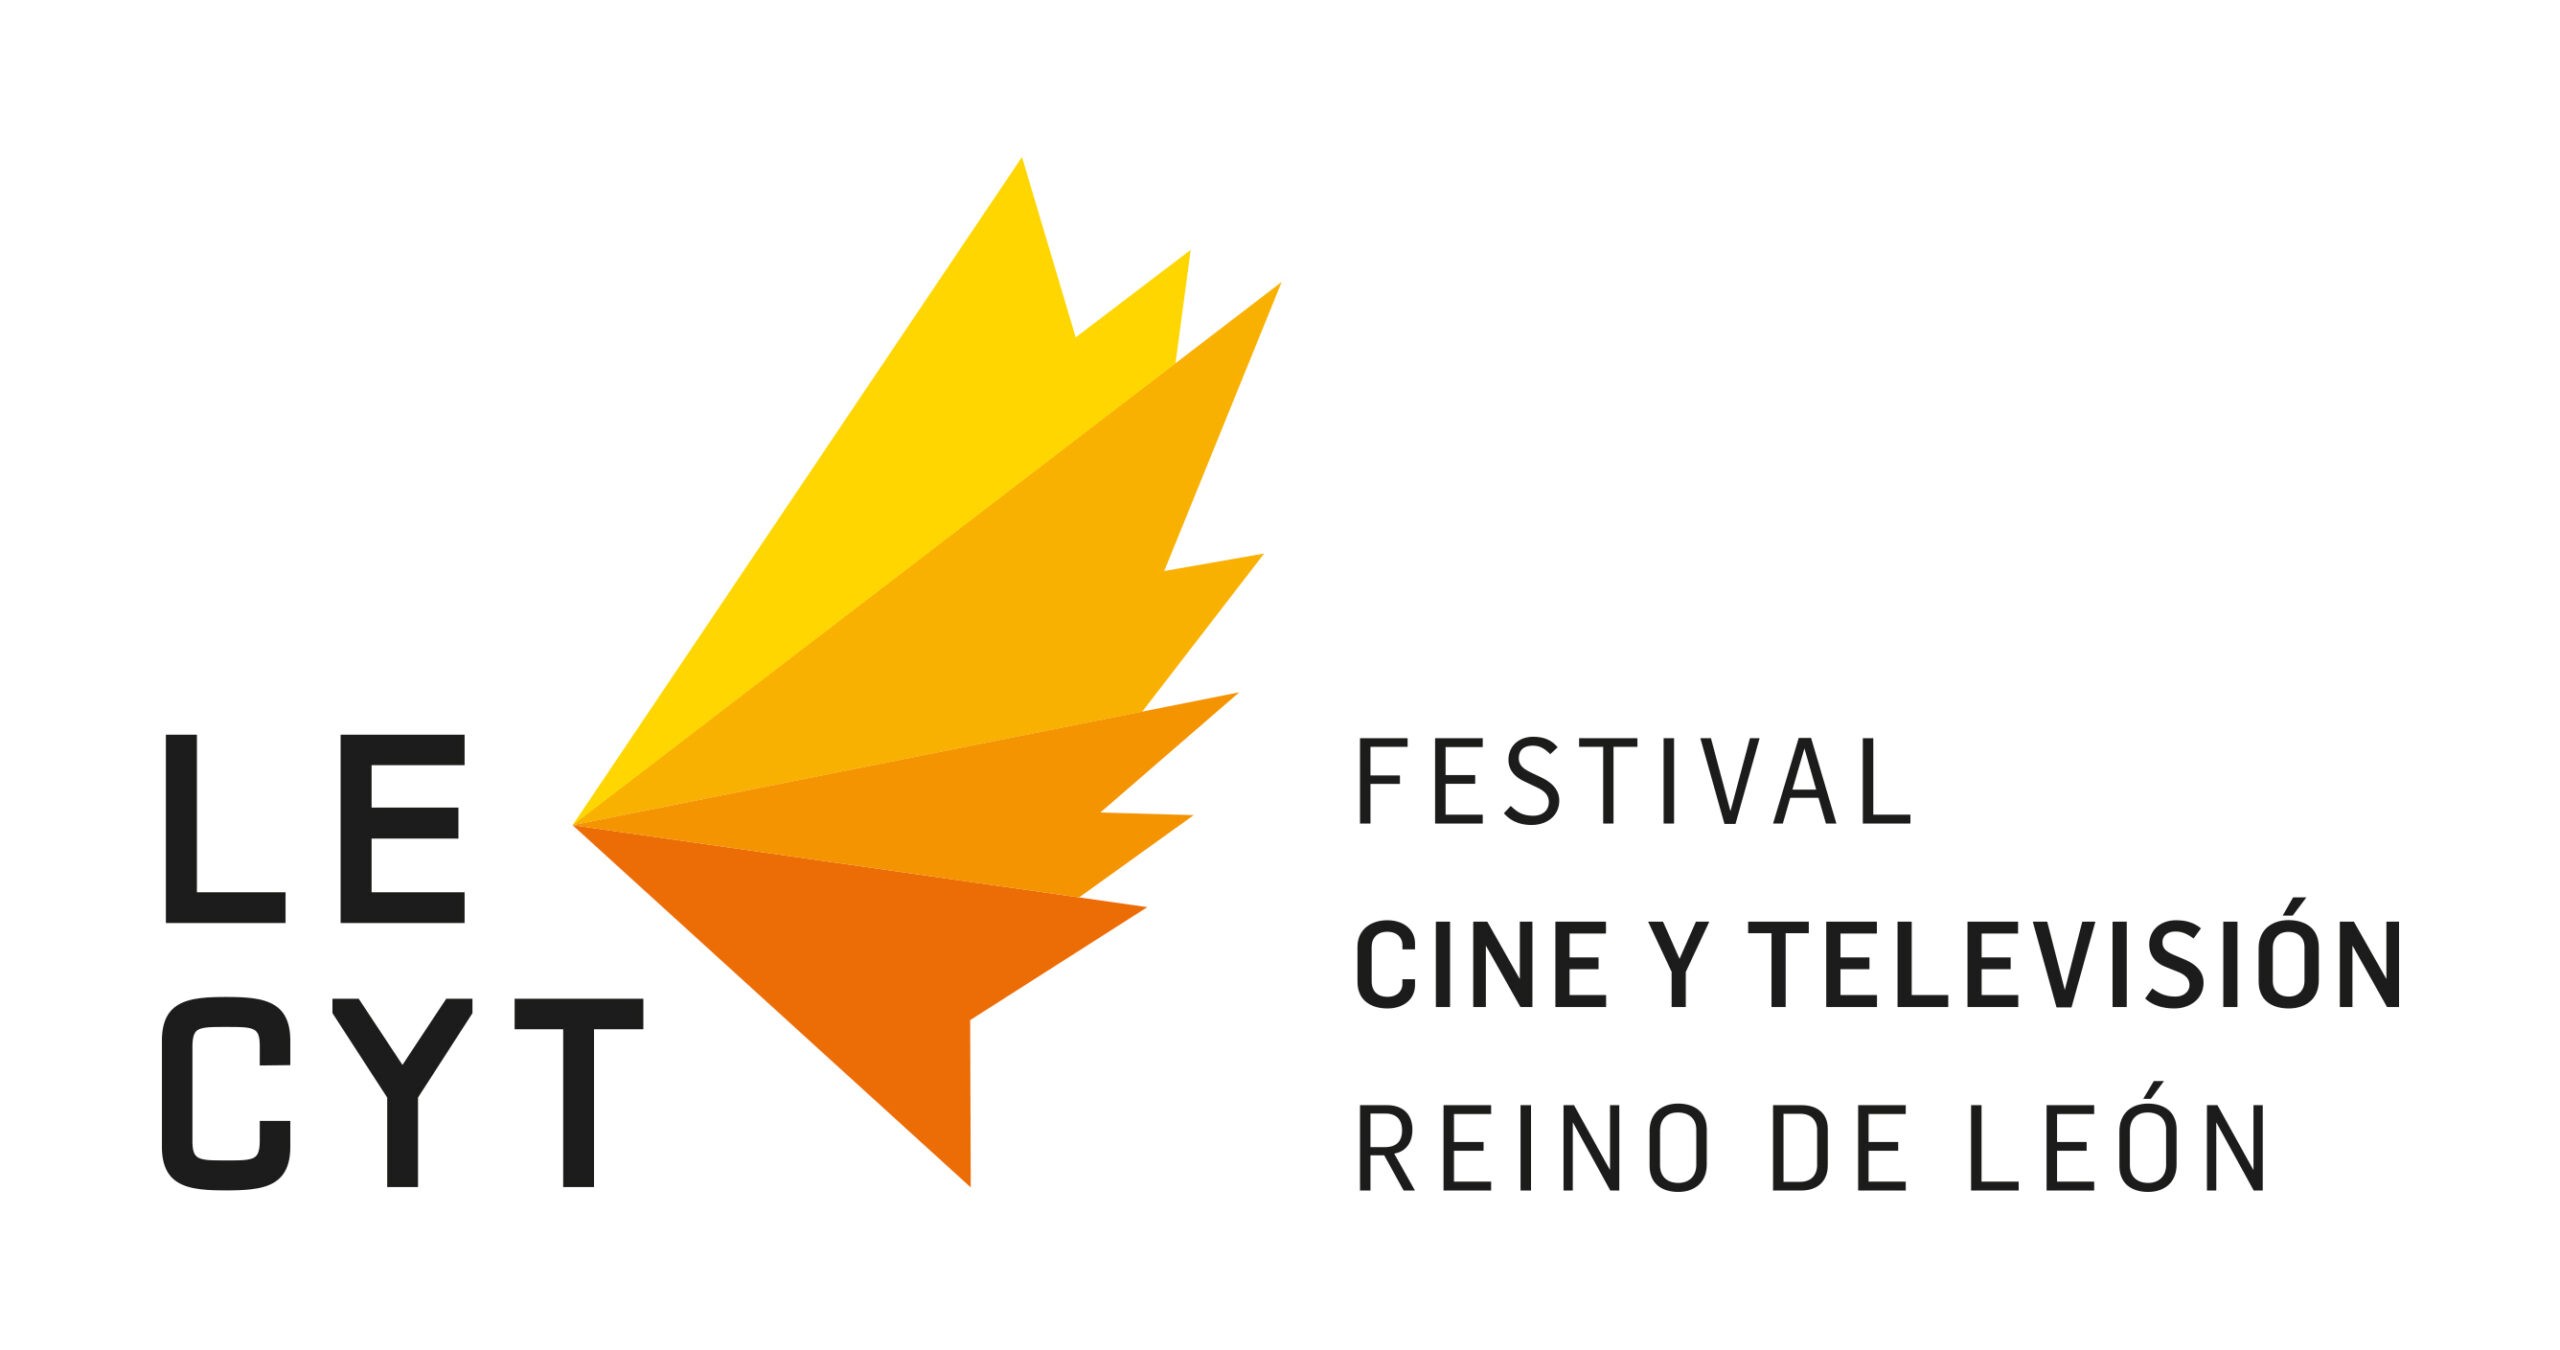 festival de cine reino leon-Digital de León